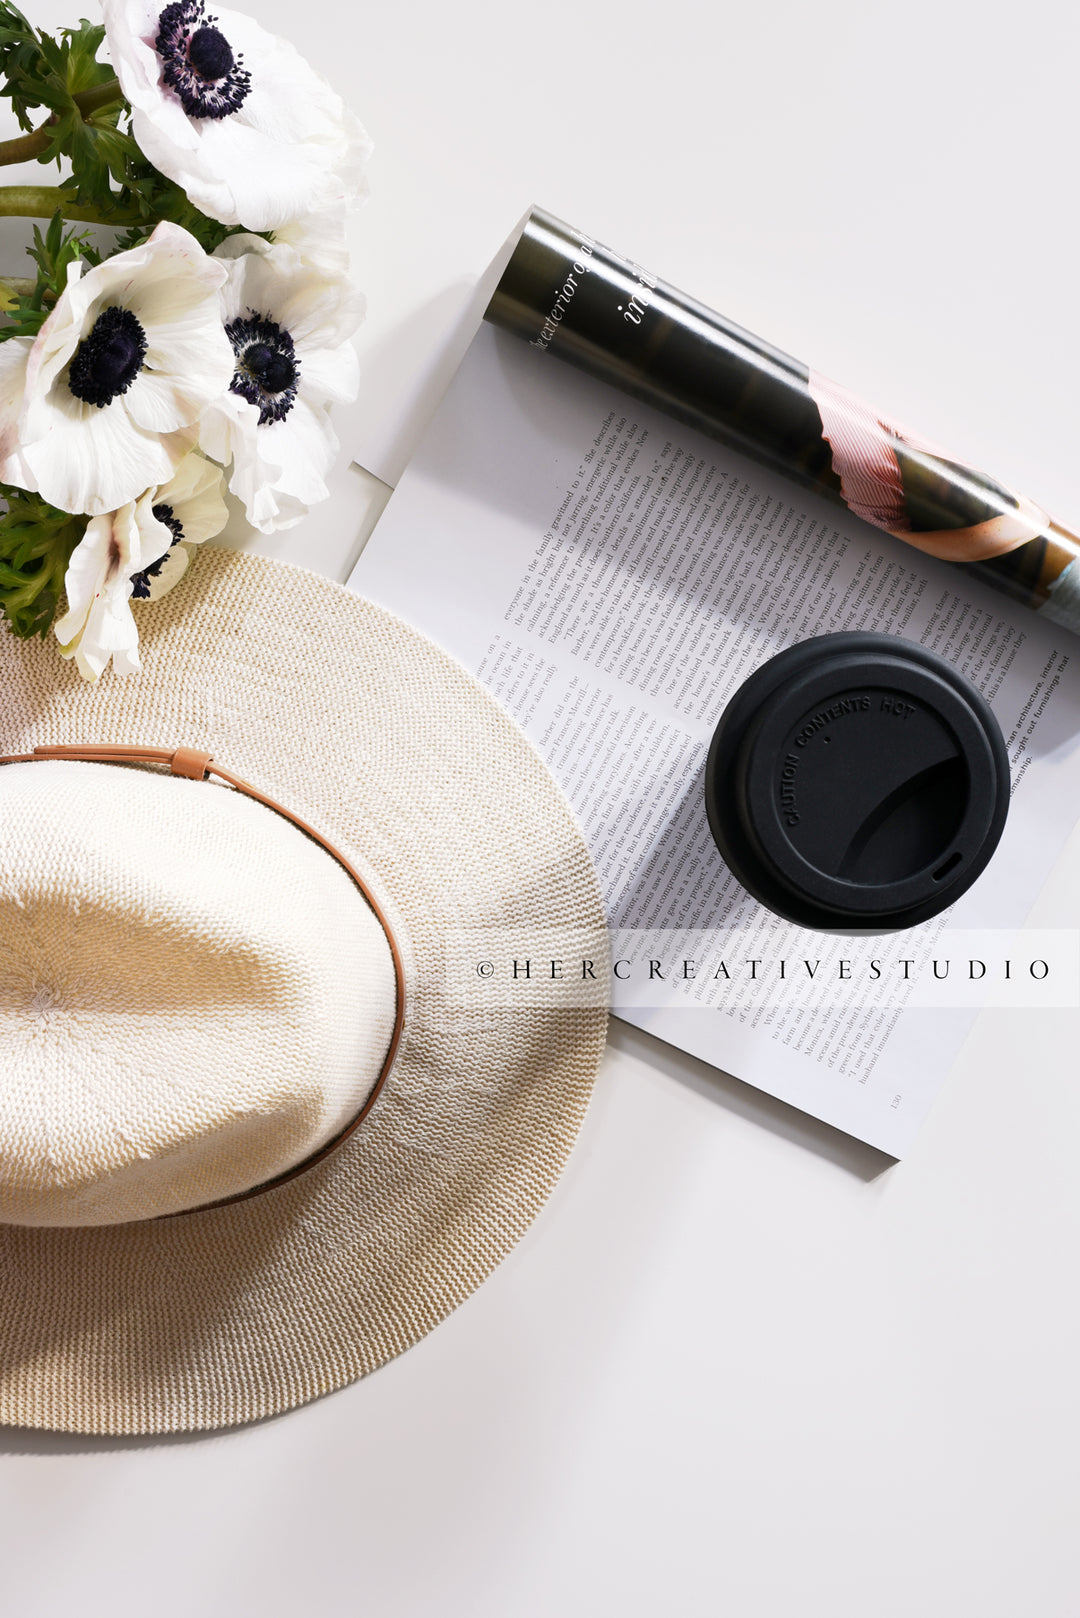 Panama Hat, Anemone & Coffee, Styled Image